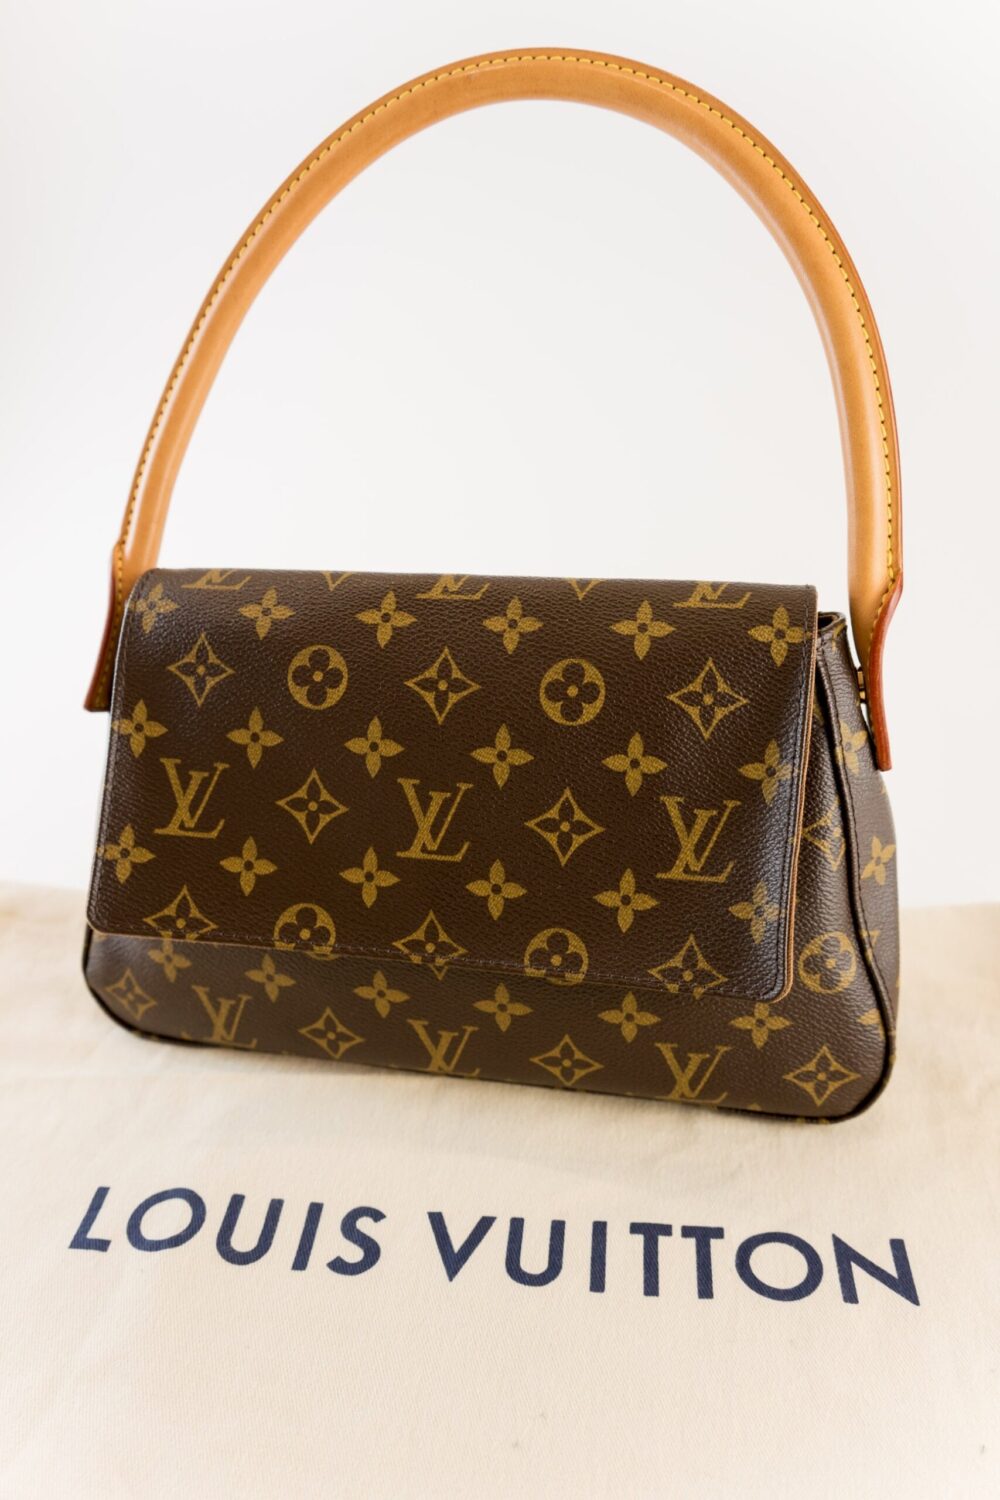 Louis Vuitton Mini Looping Review 